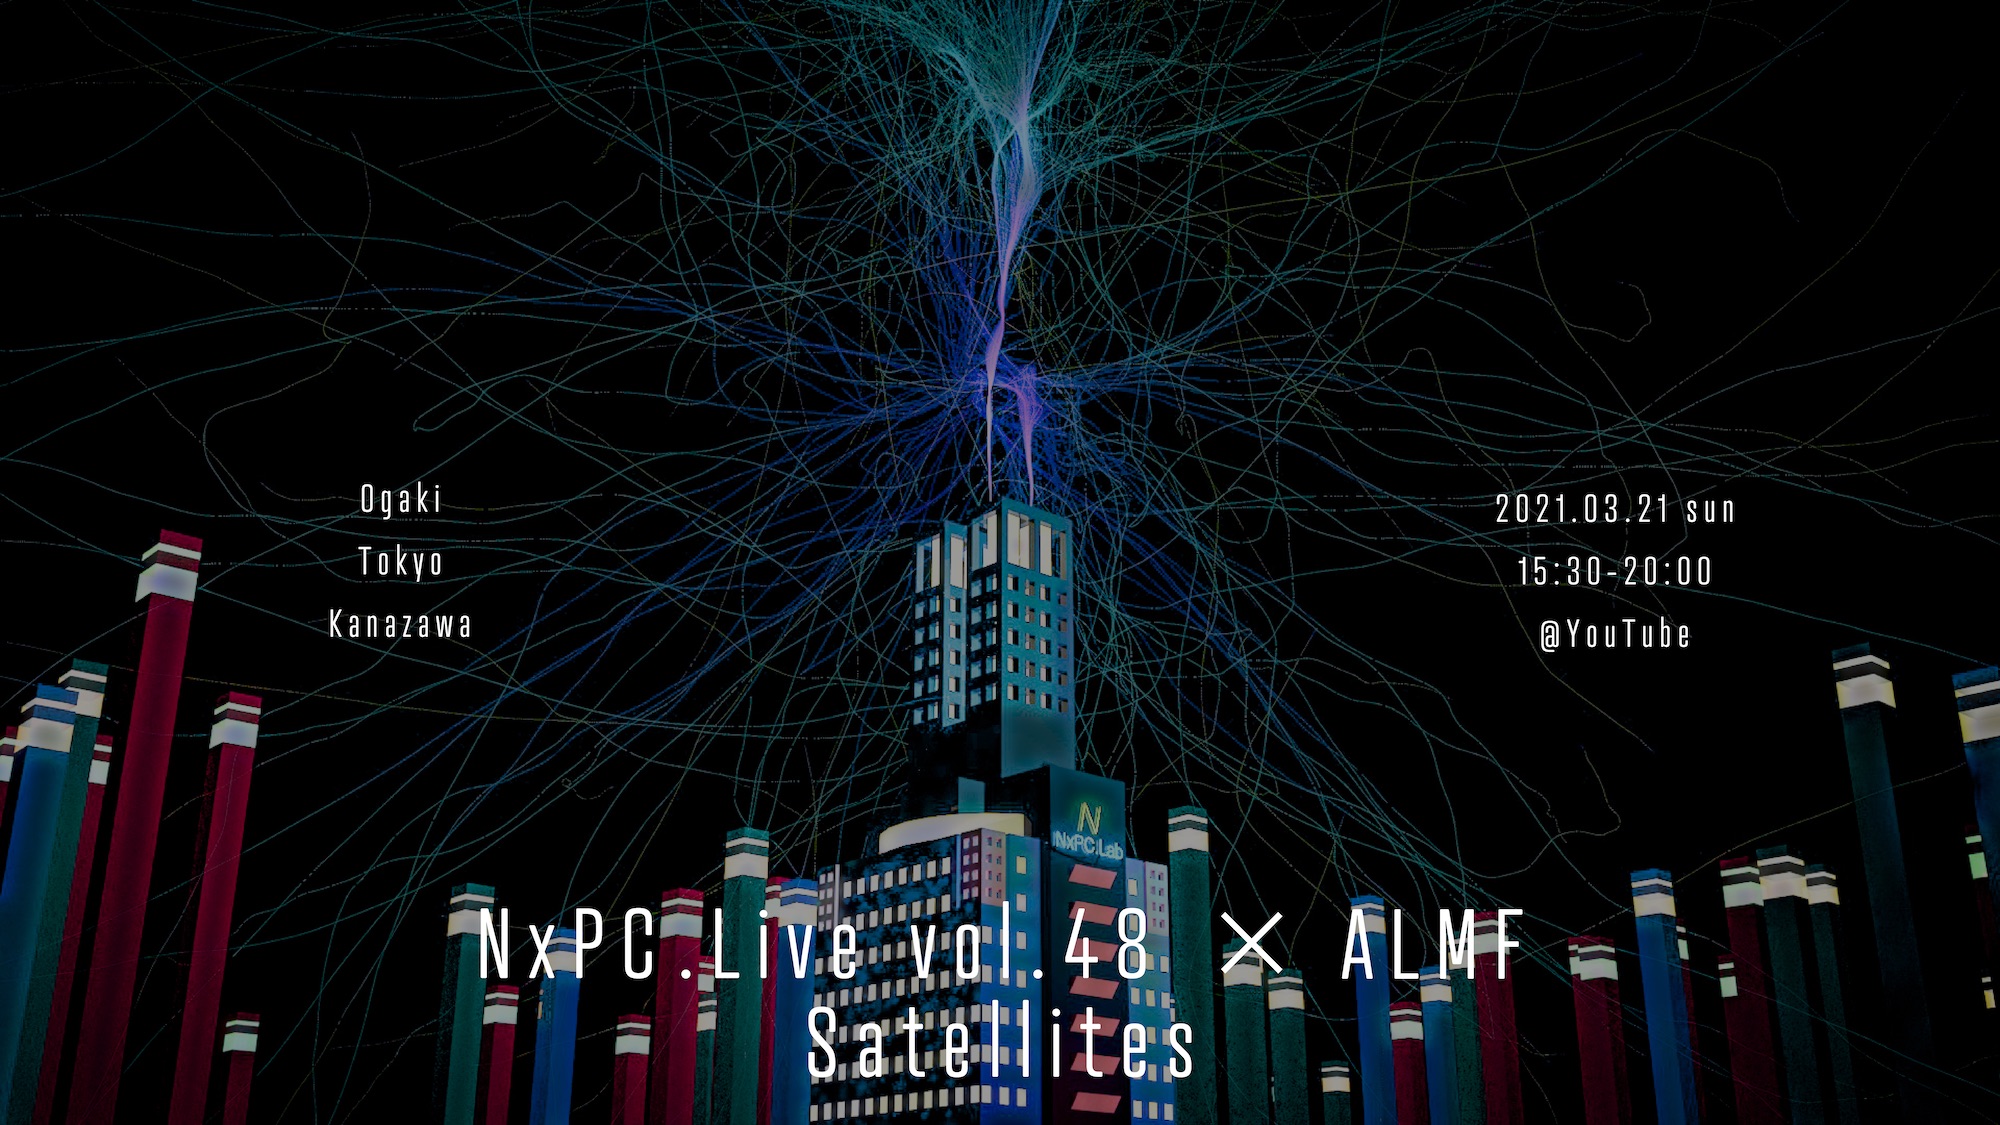 NxPC.Live vol.48 X ALMF Satellites